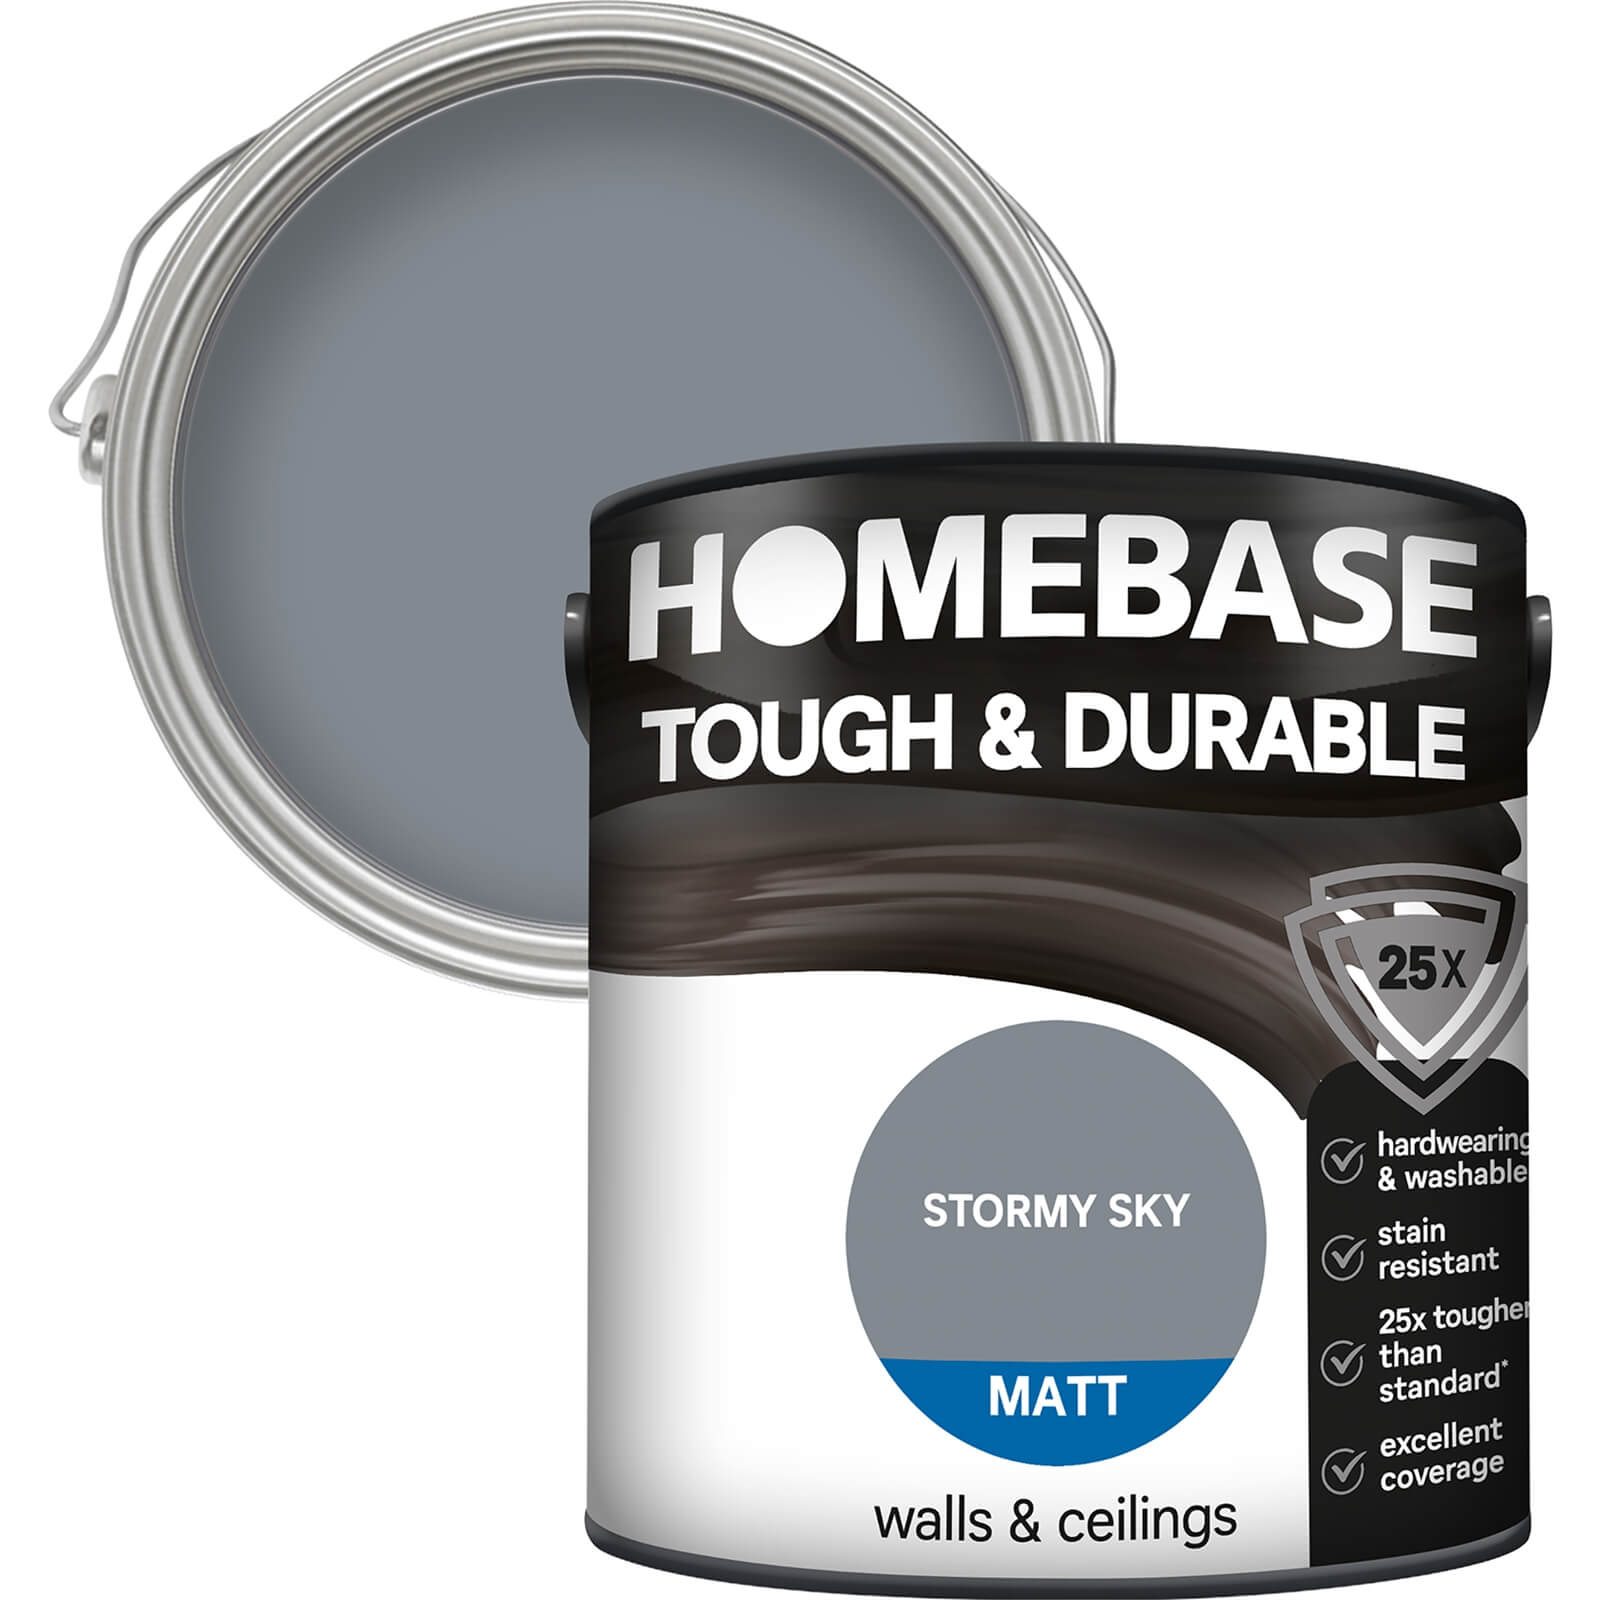 Homebase Tough & Durable Matt Paint Stormy Sky - 2.5L